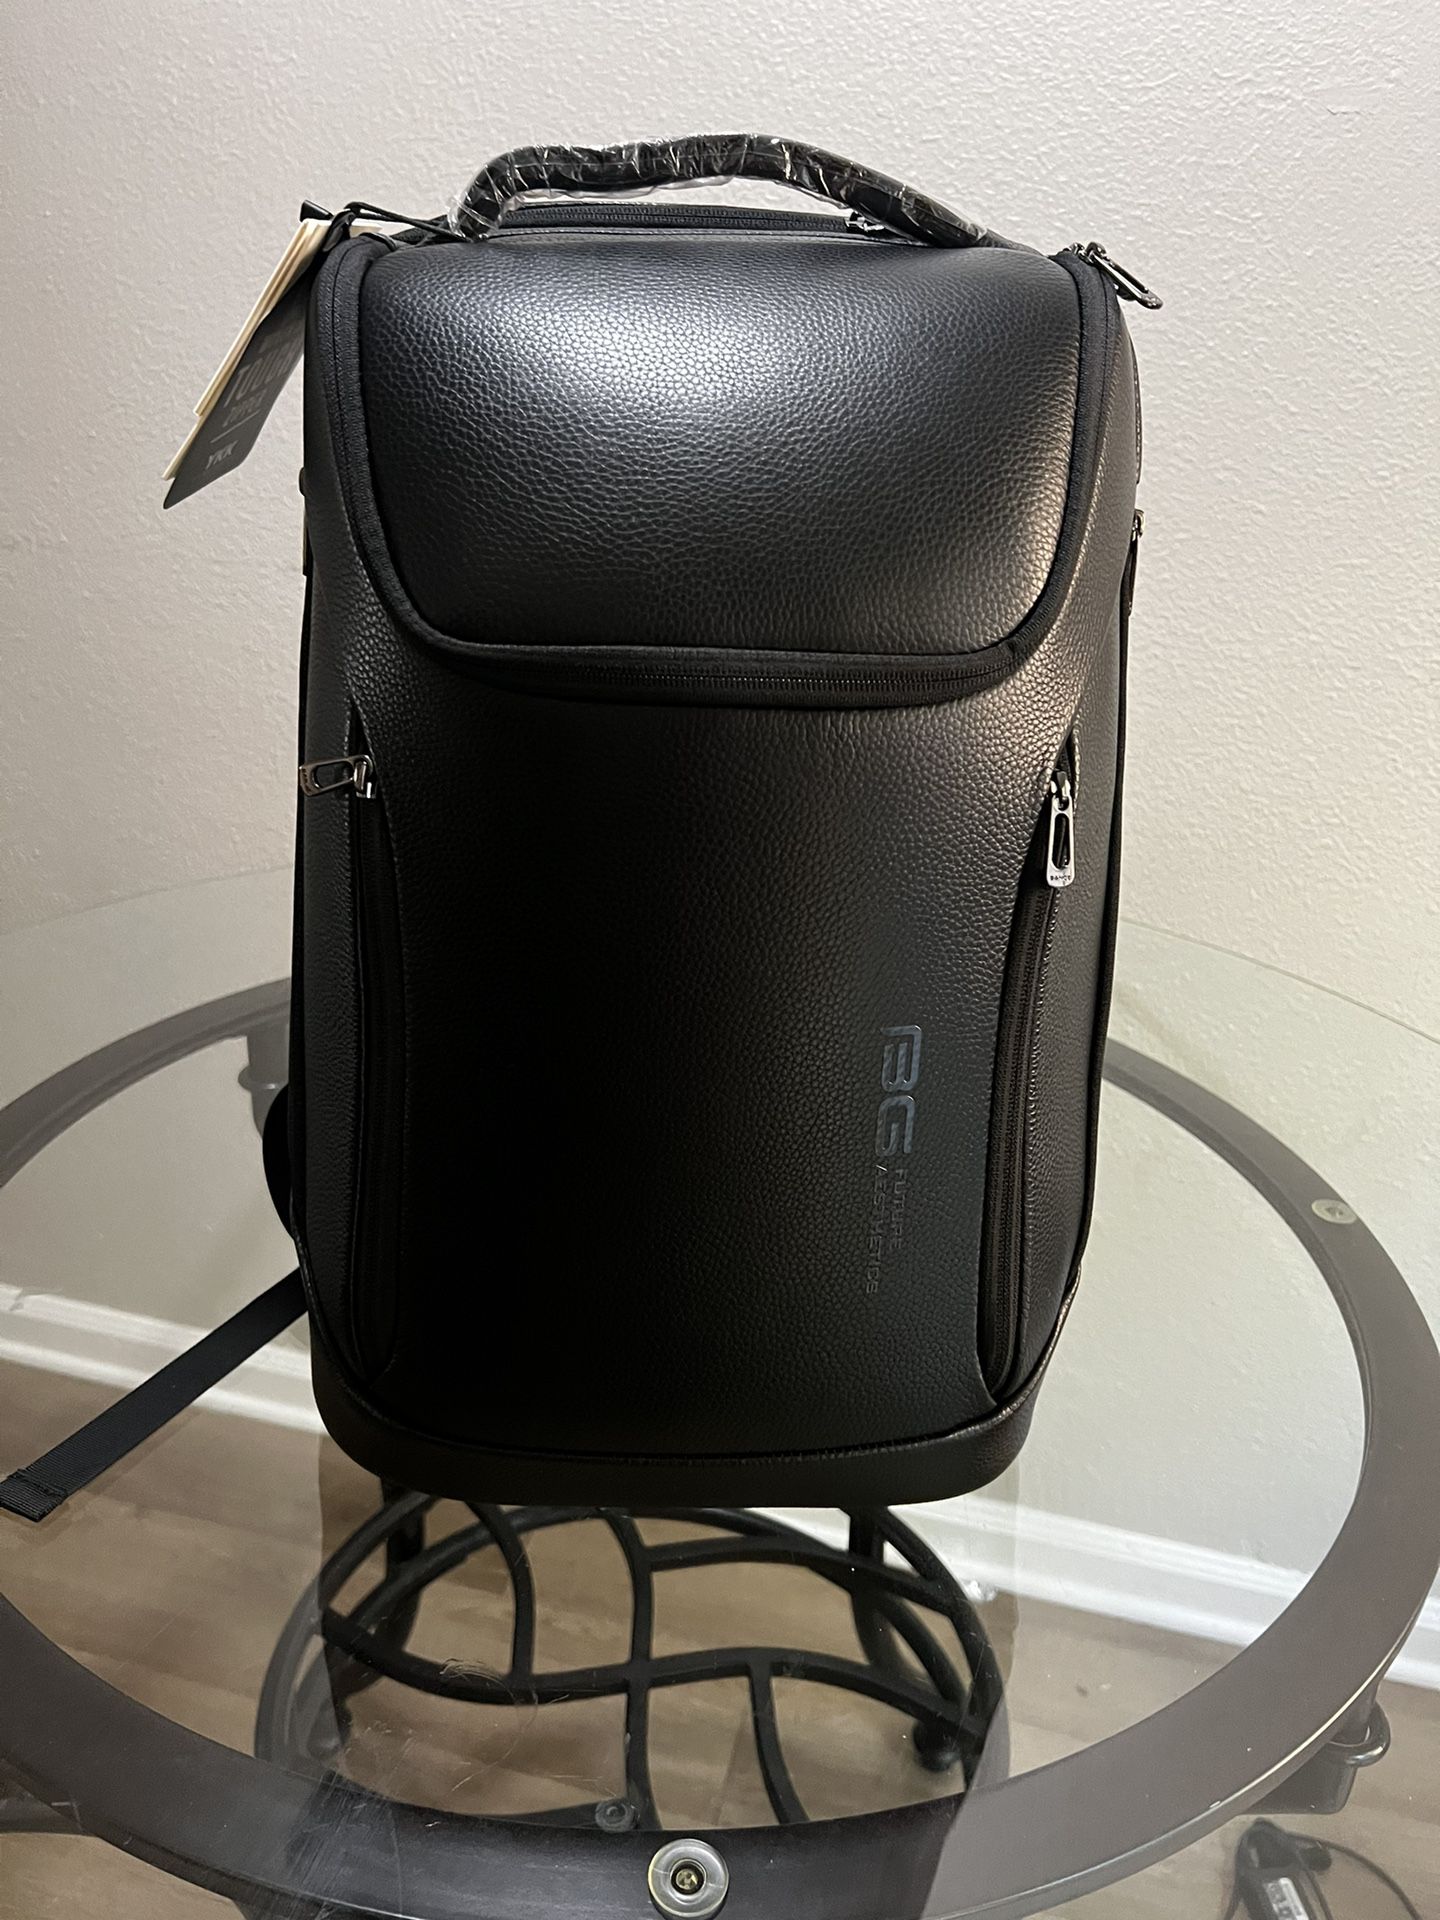 BANGE Business Smart Backpack Waterproof fit 15.6 Inch Laptop Backpack with USB Charging Port,Travel Durable Backpack (leather black, Medium)